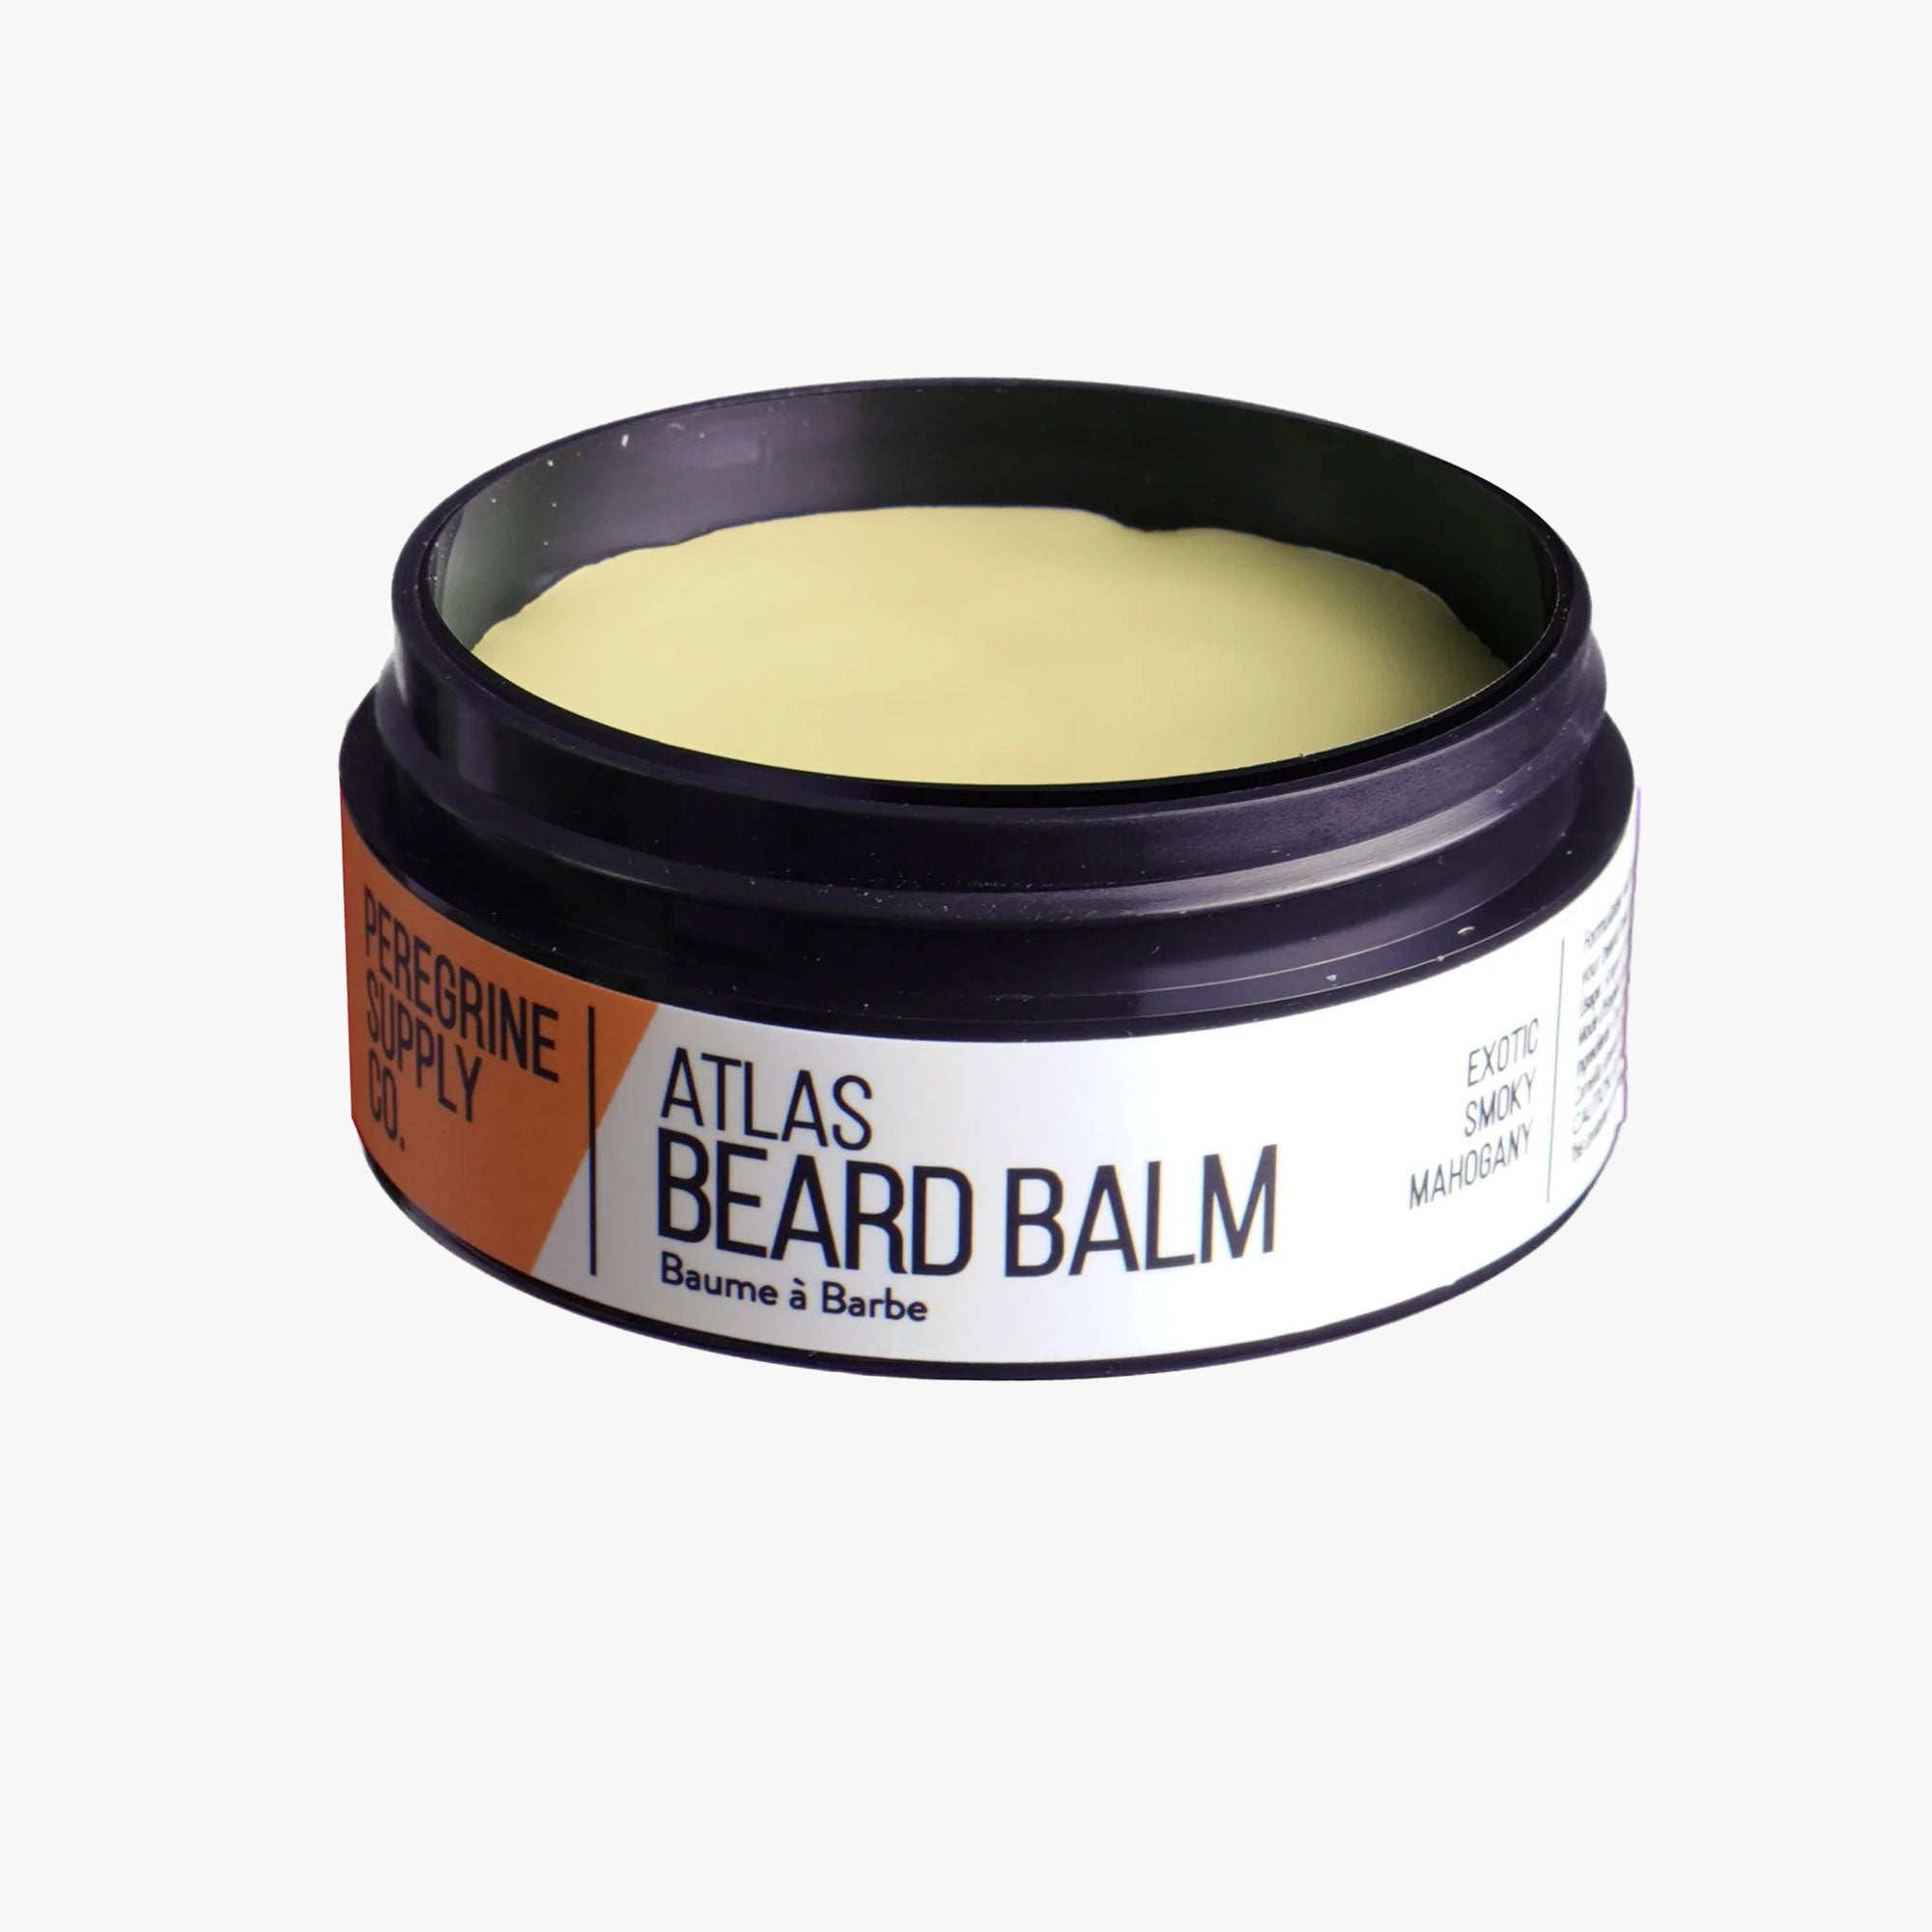 Peregrine Supply Co. Atlas Beard Balm